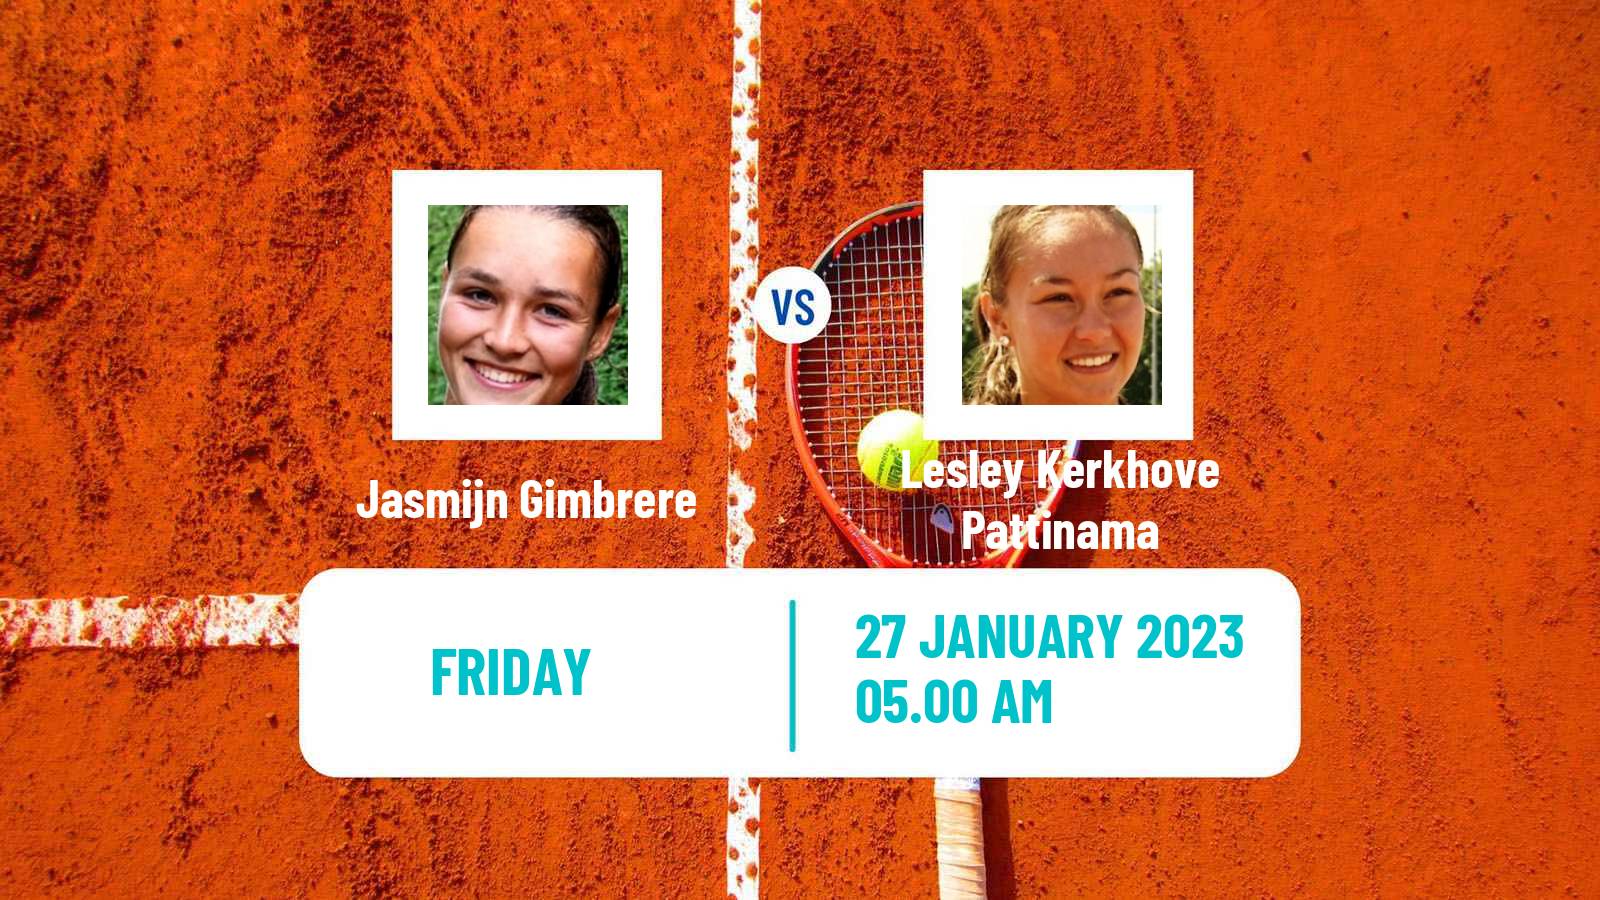 Tennis ITF Tournaments Jasmijn Gimbrere - Lesley Kerkhove Pattinama